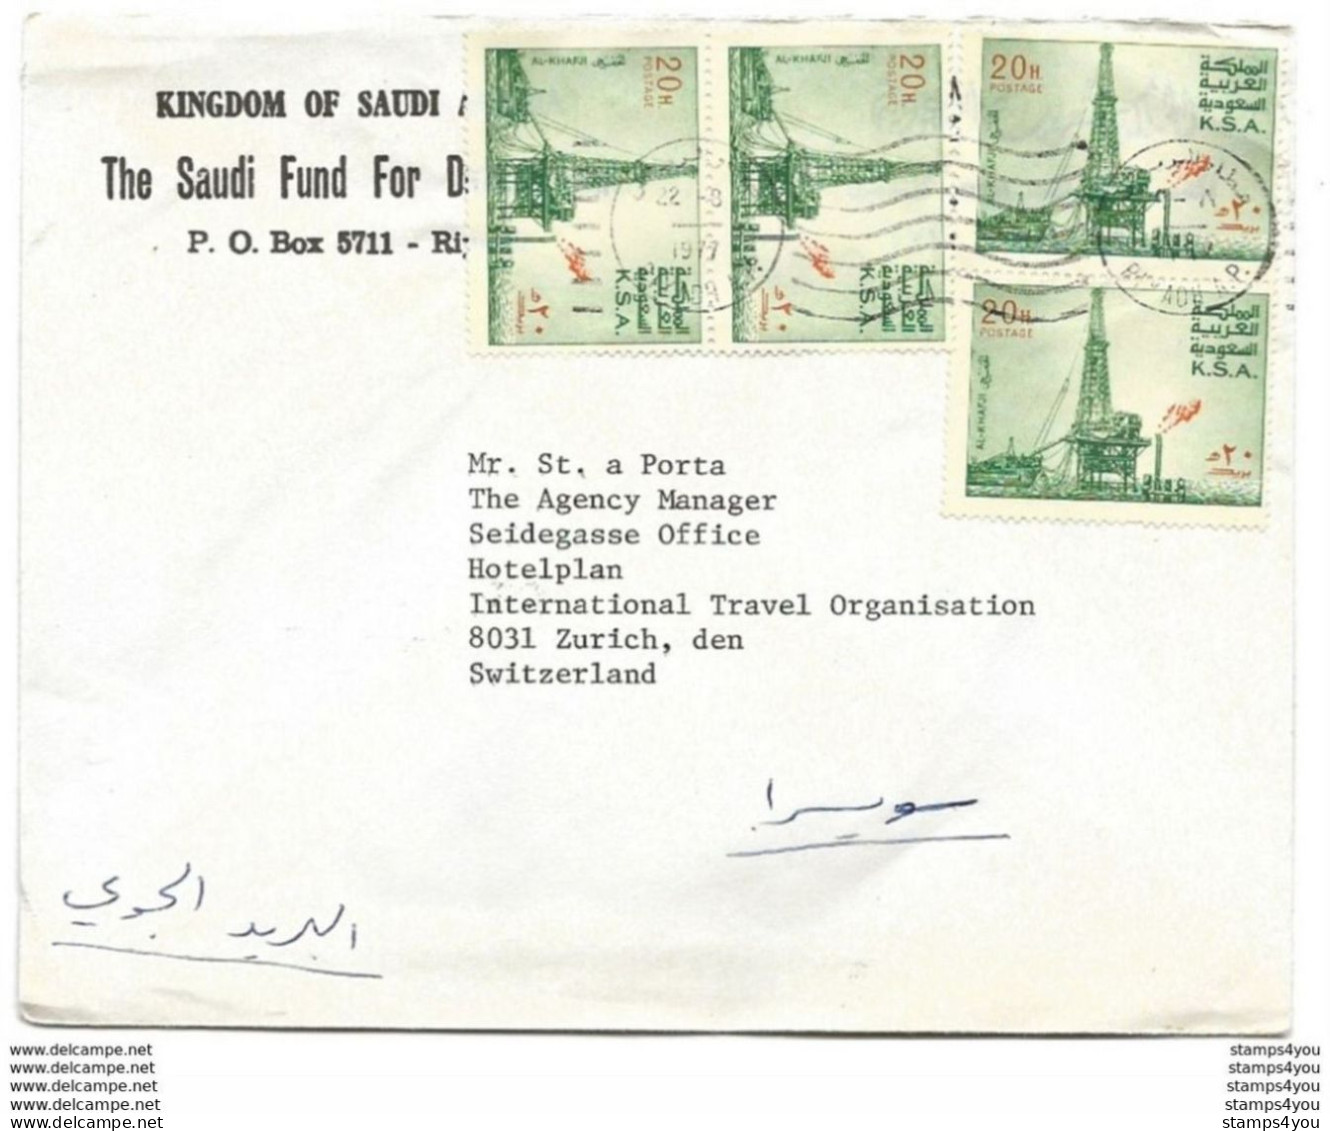 239 - 27 - Enveloppe Envoyée De Riyadh En Suisse - Arabie Saoudite